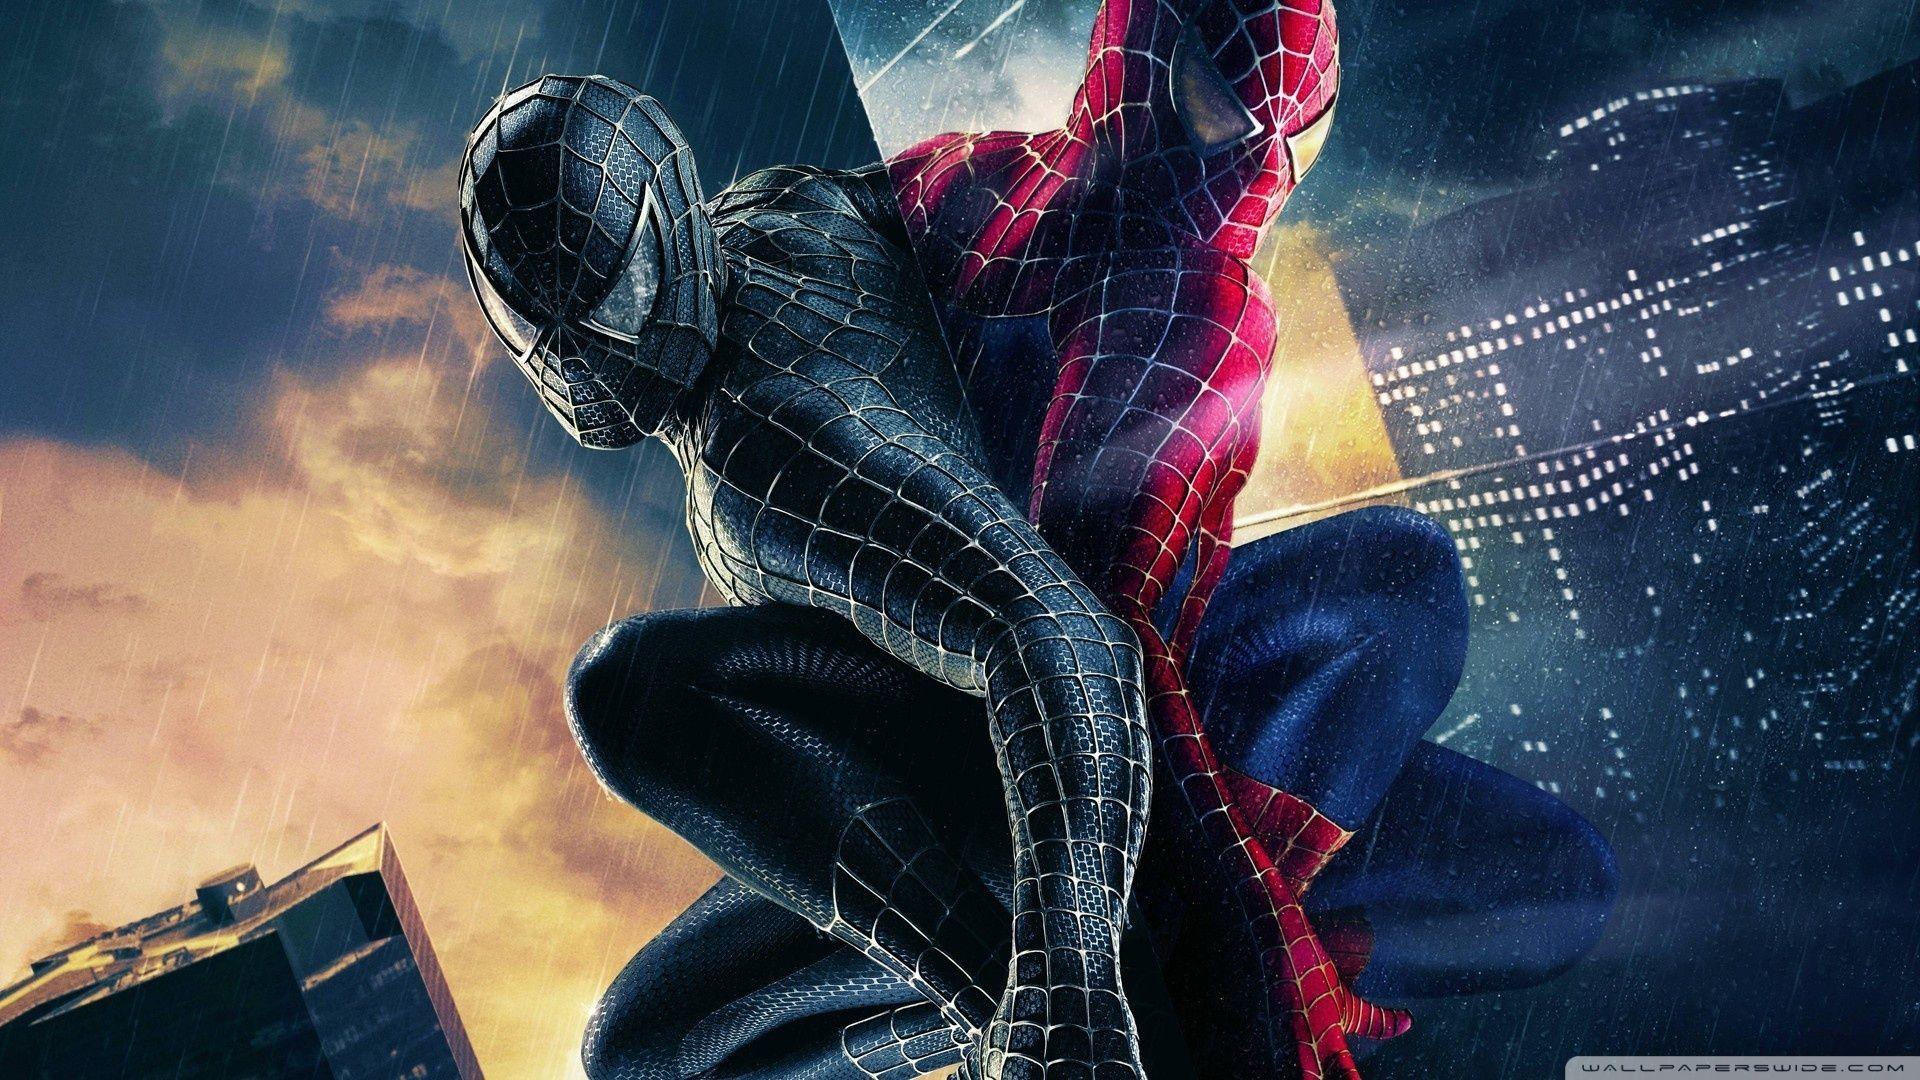 Black Spider-Man 4K Wallpapers - Top Free Black Spider-Man 4K